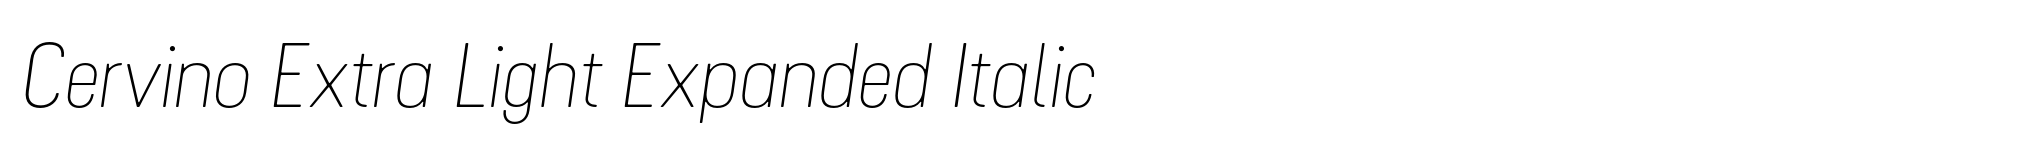 Cervino Extra Light Expanded Italic image